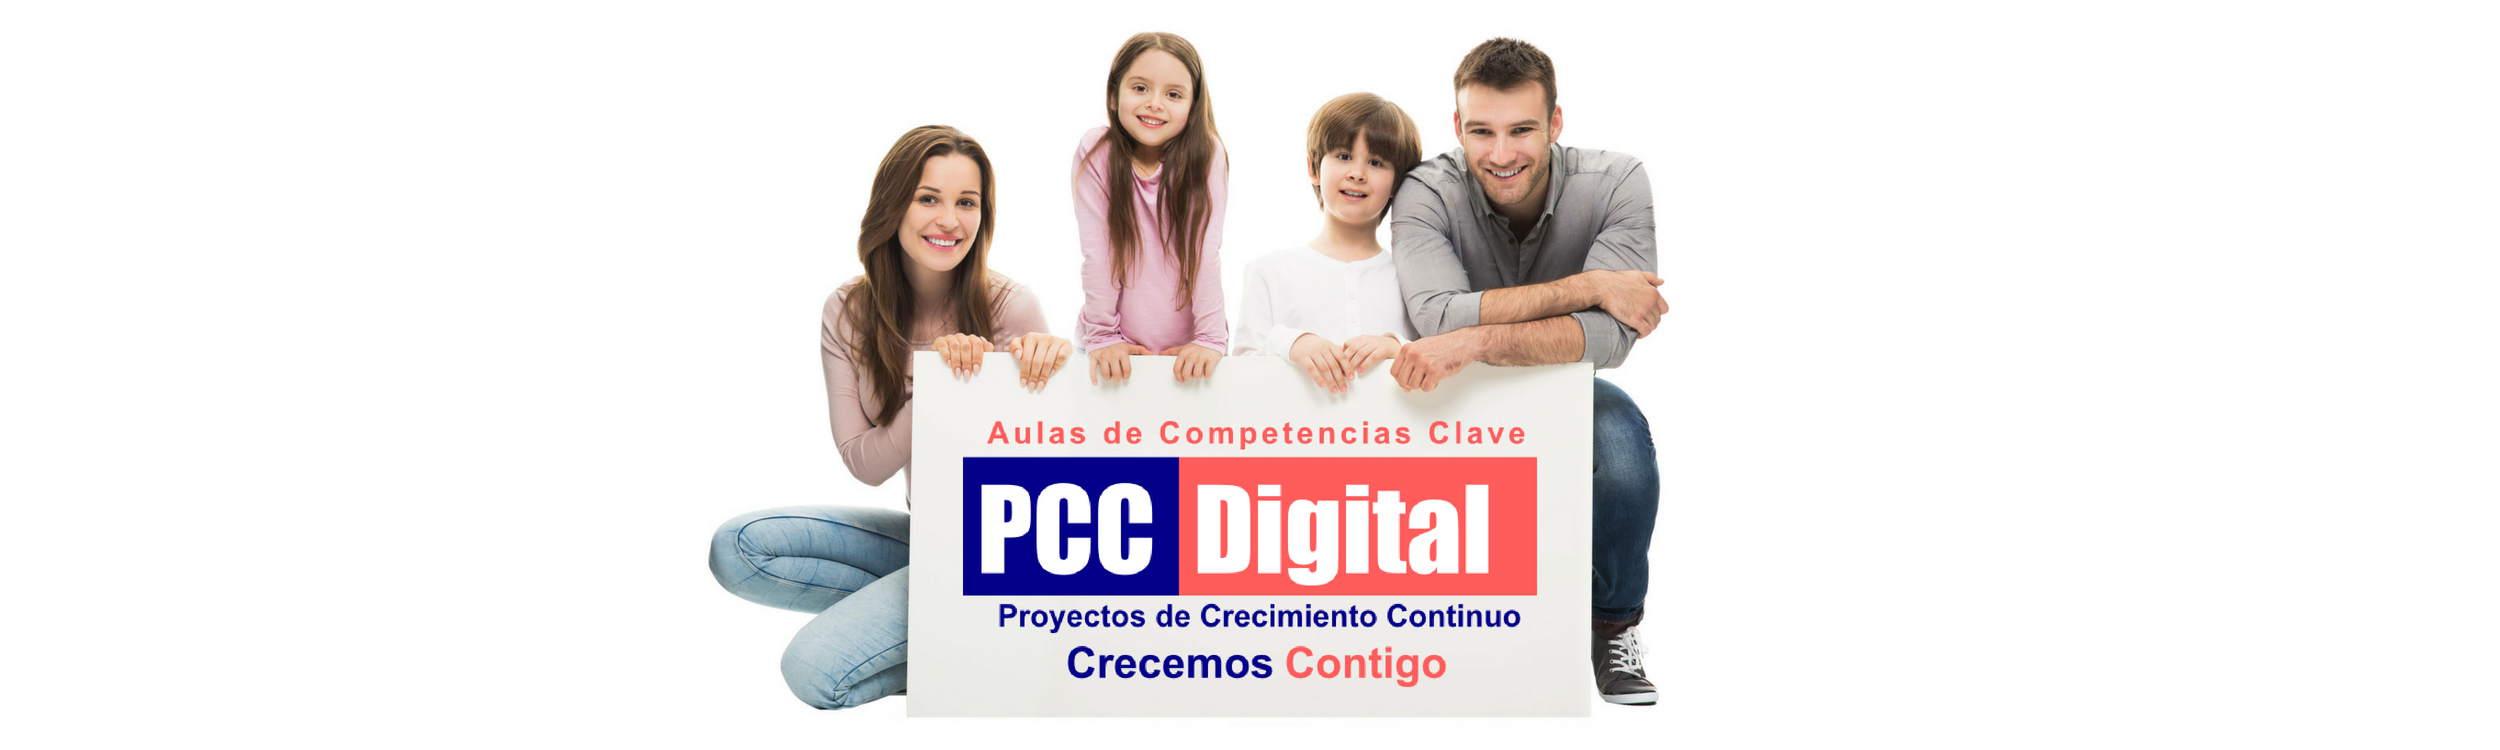 Cabecera PCC Digital